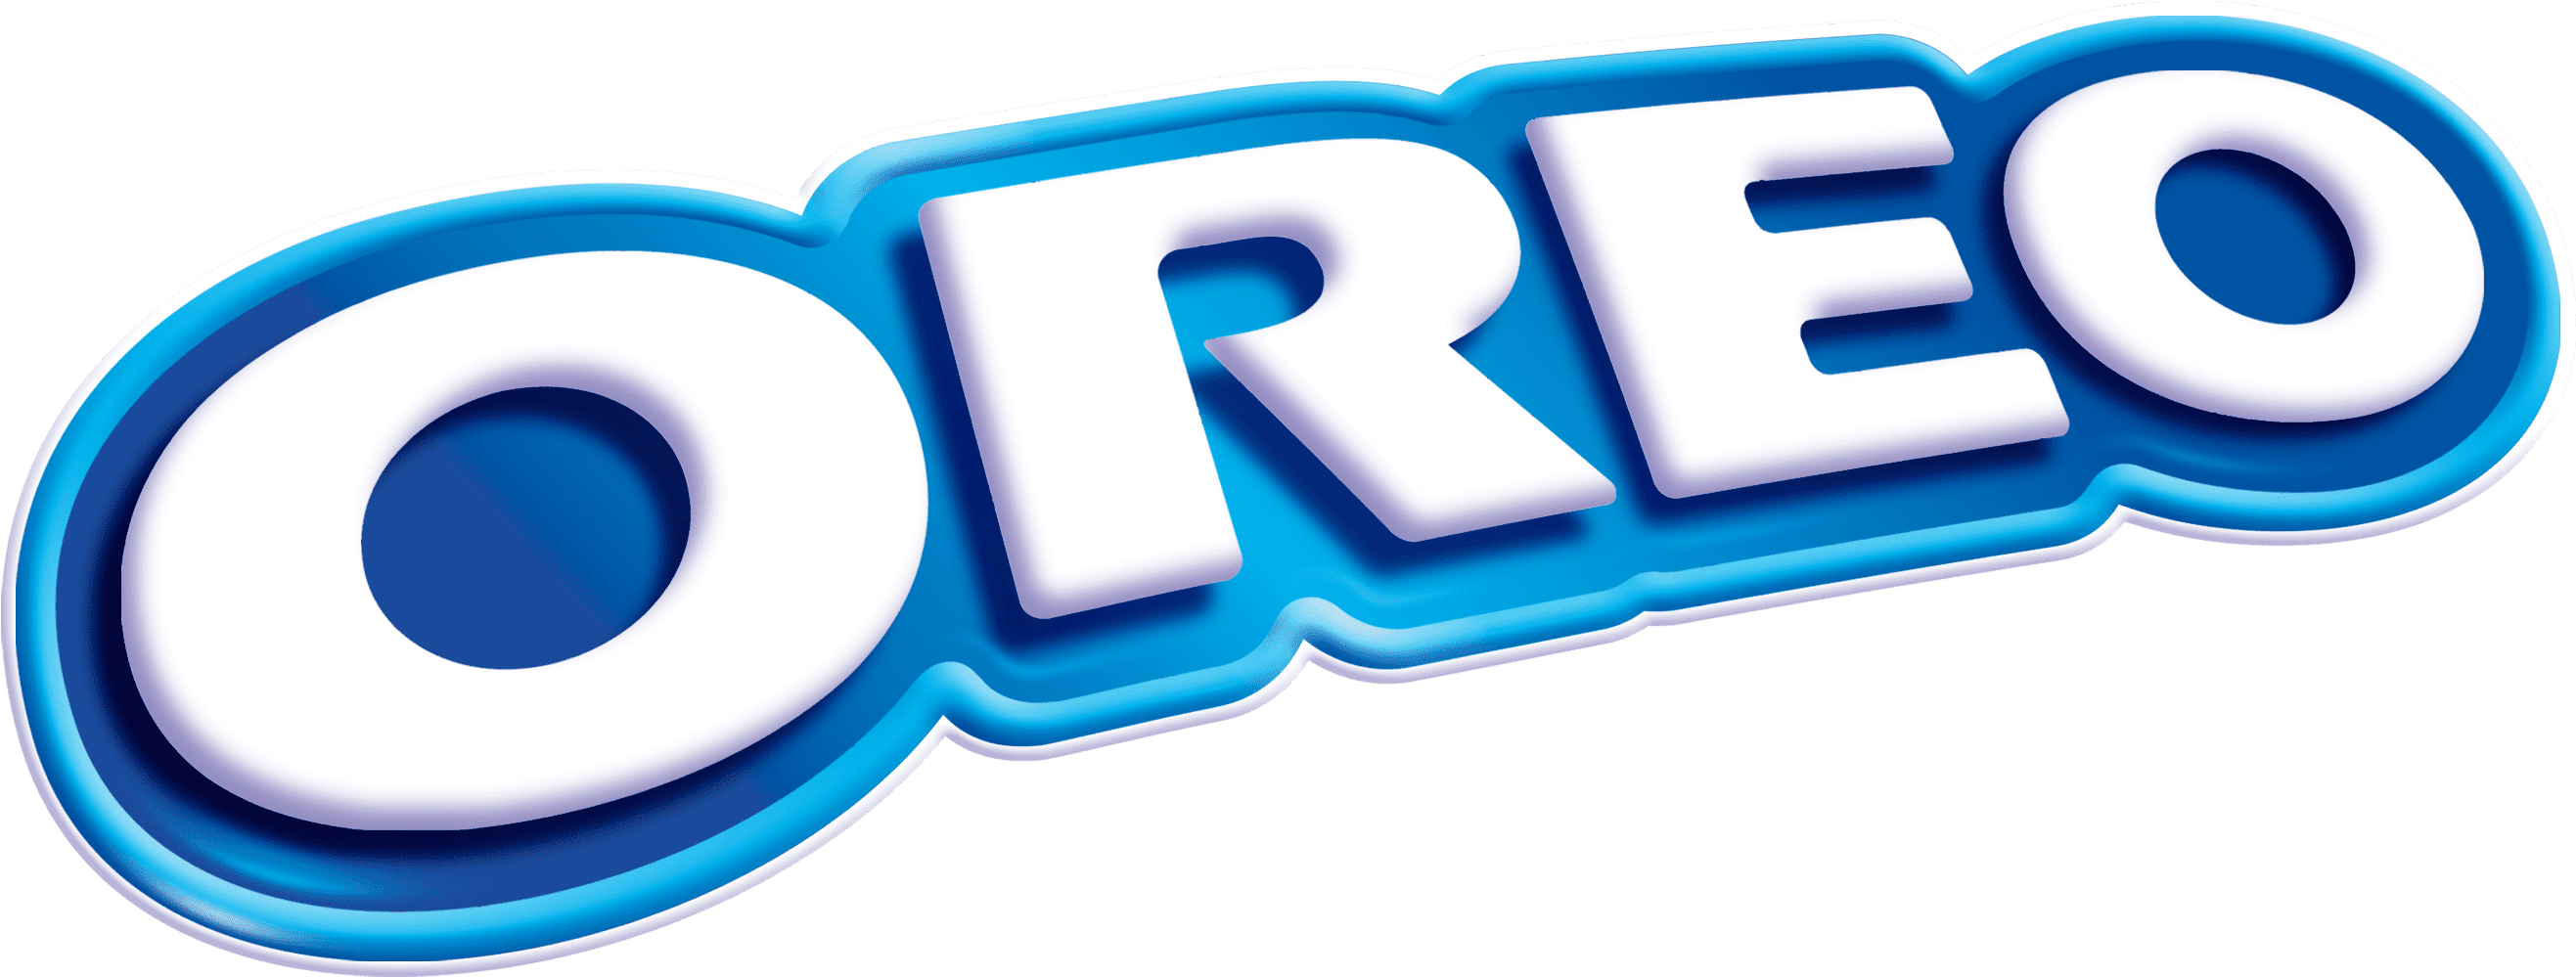 Oreo-logo